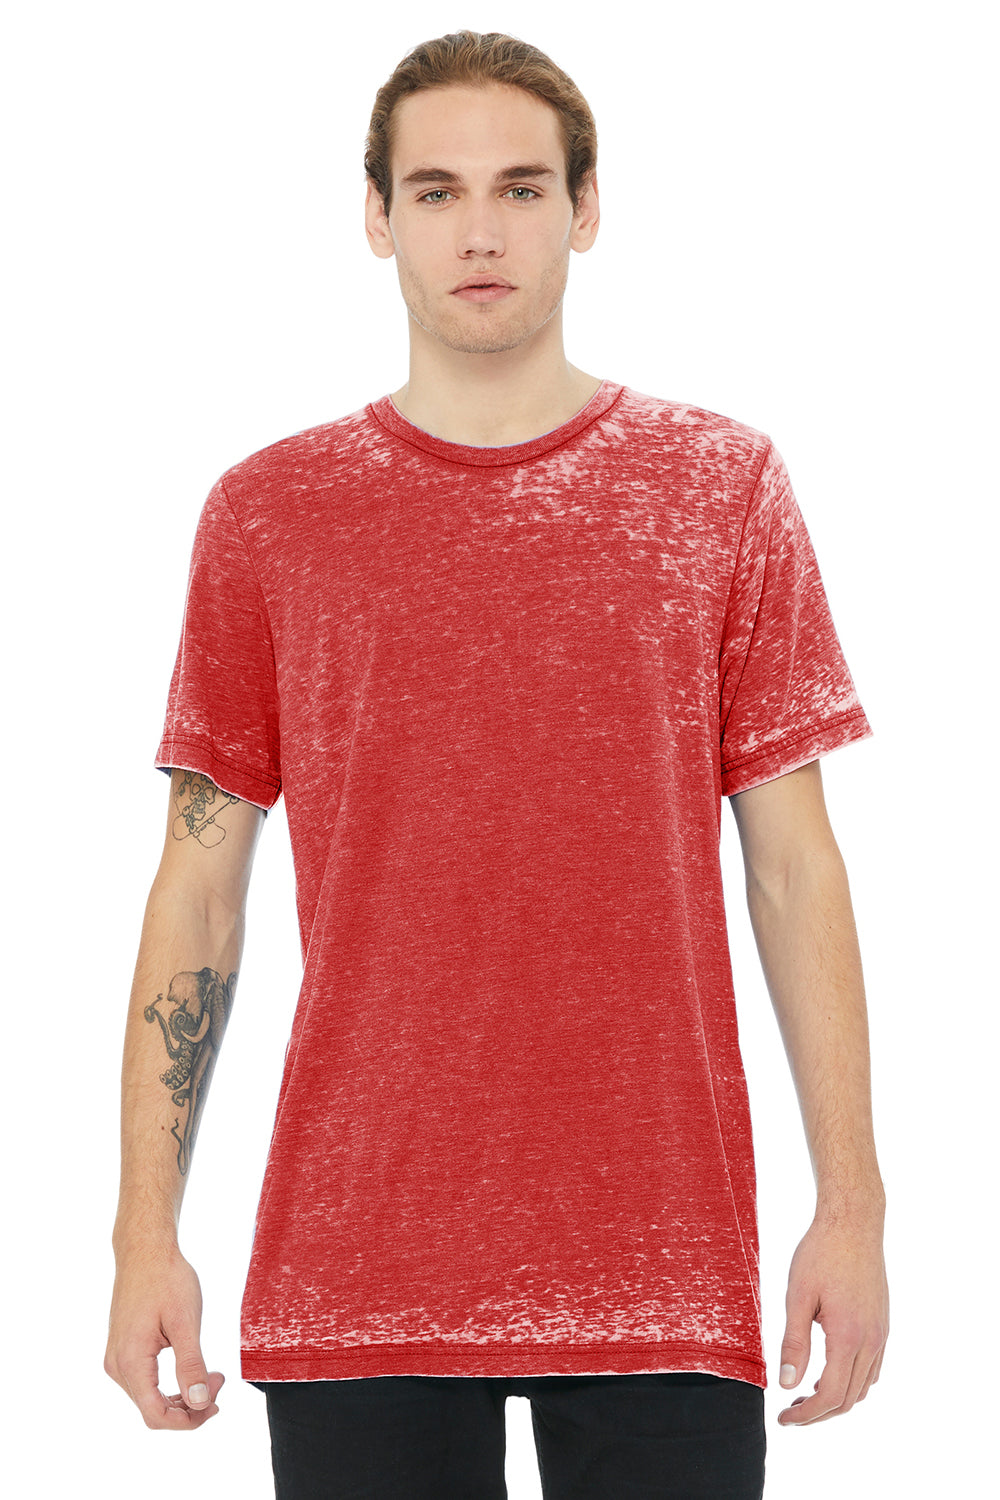 Bella + Canvas 3650 Mens Short Sleeve Crewneck T-Shirt Red Acid Washed Front